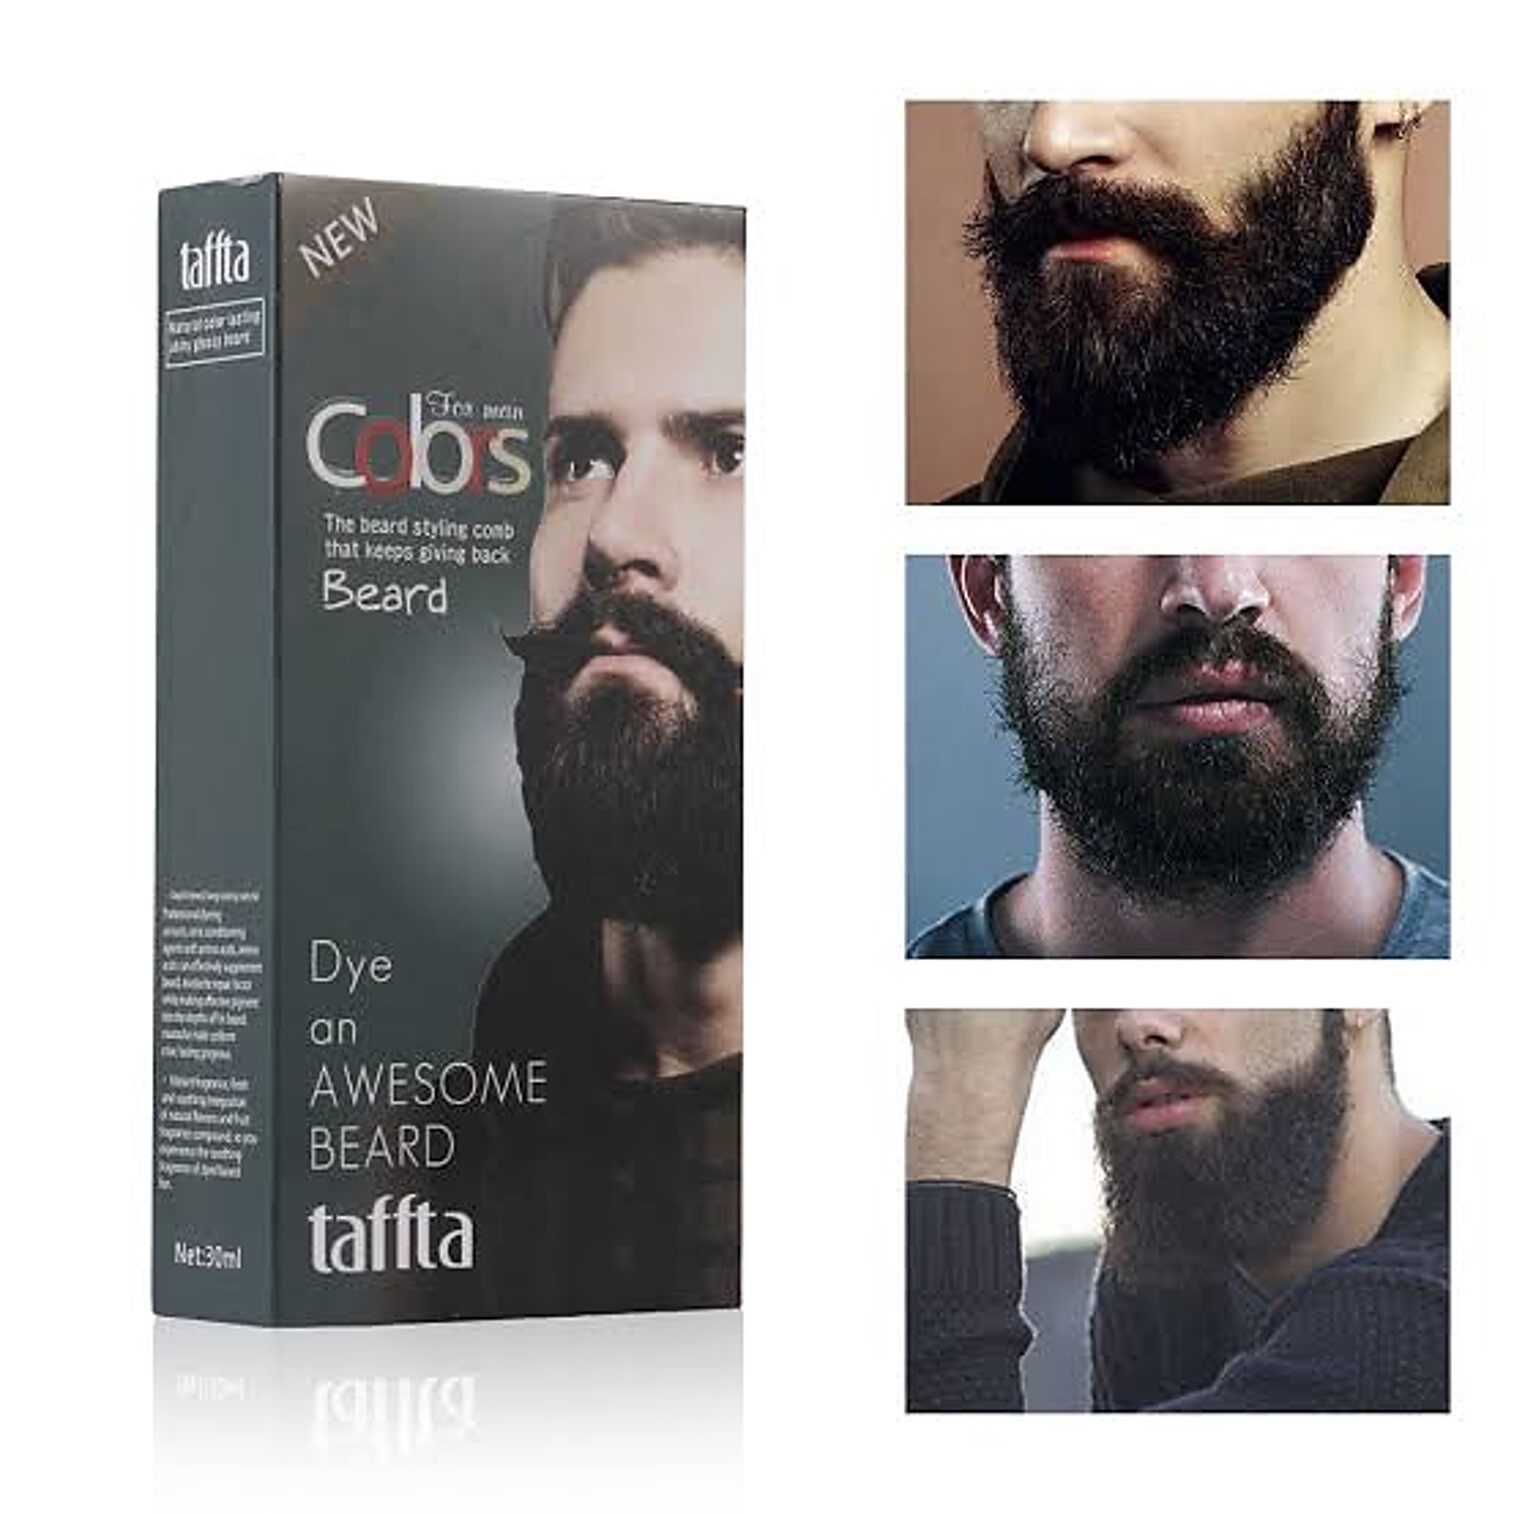 TAFFTA For Man Colors Cream The Beard Styling Comb That Keeps Giving Back Mustache & Beard Natural Black 30ml. ครีมเปลี่ยนสีผมหนวดเคราคิ้วสำหรับผู้ชาย สินค้านำเข้าจากต่างประเทศ สีดำธรรมชาติ